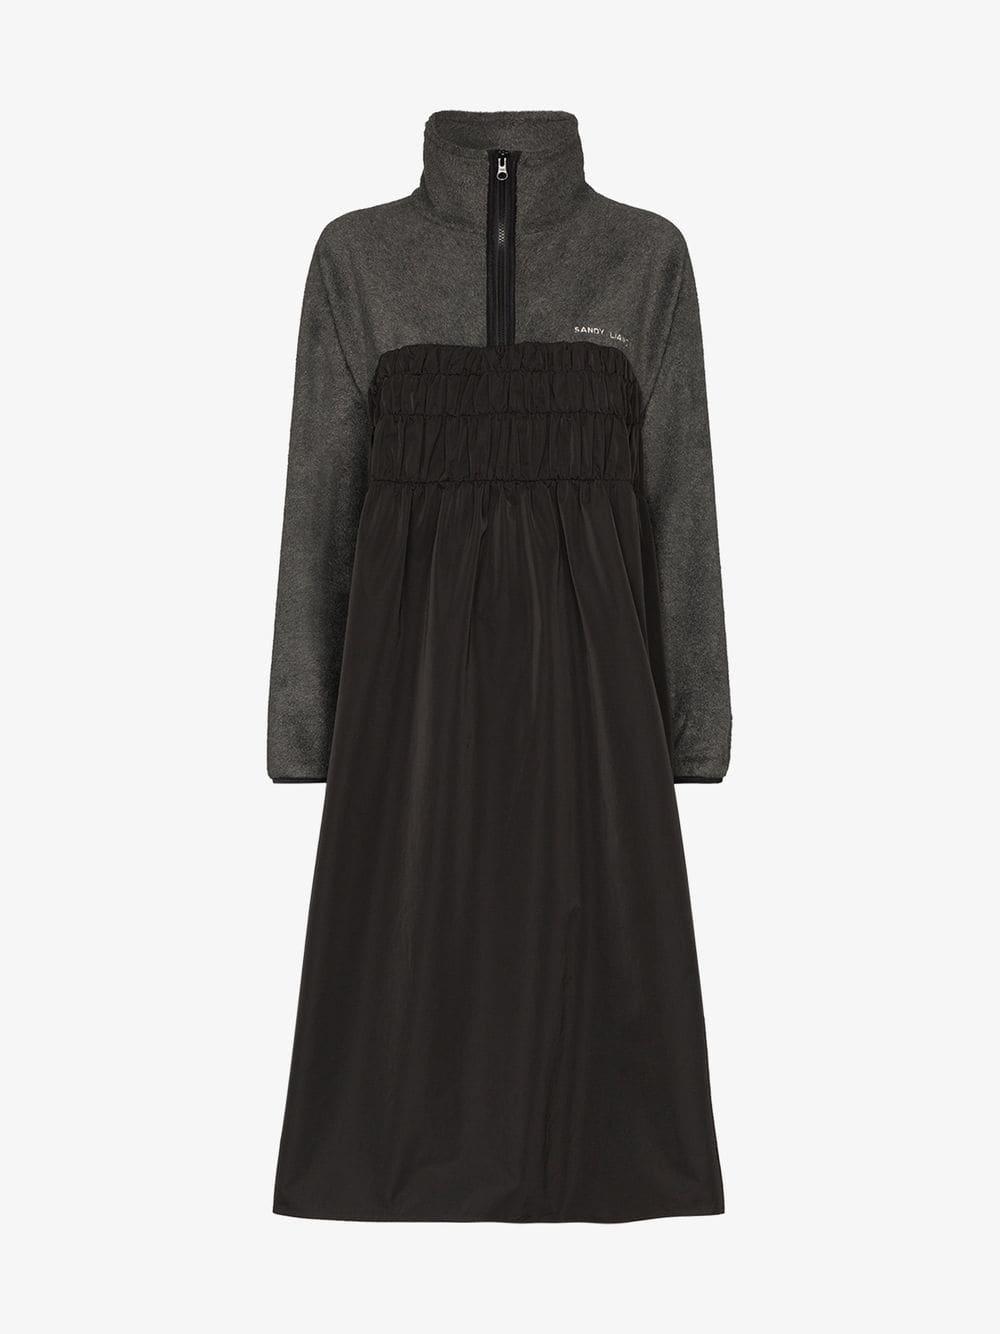 Sandy Liang Mary Mary Fleece Dress in Black